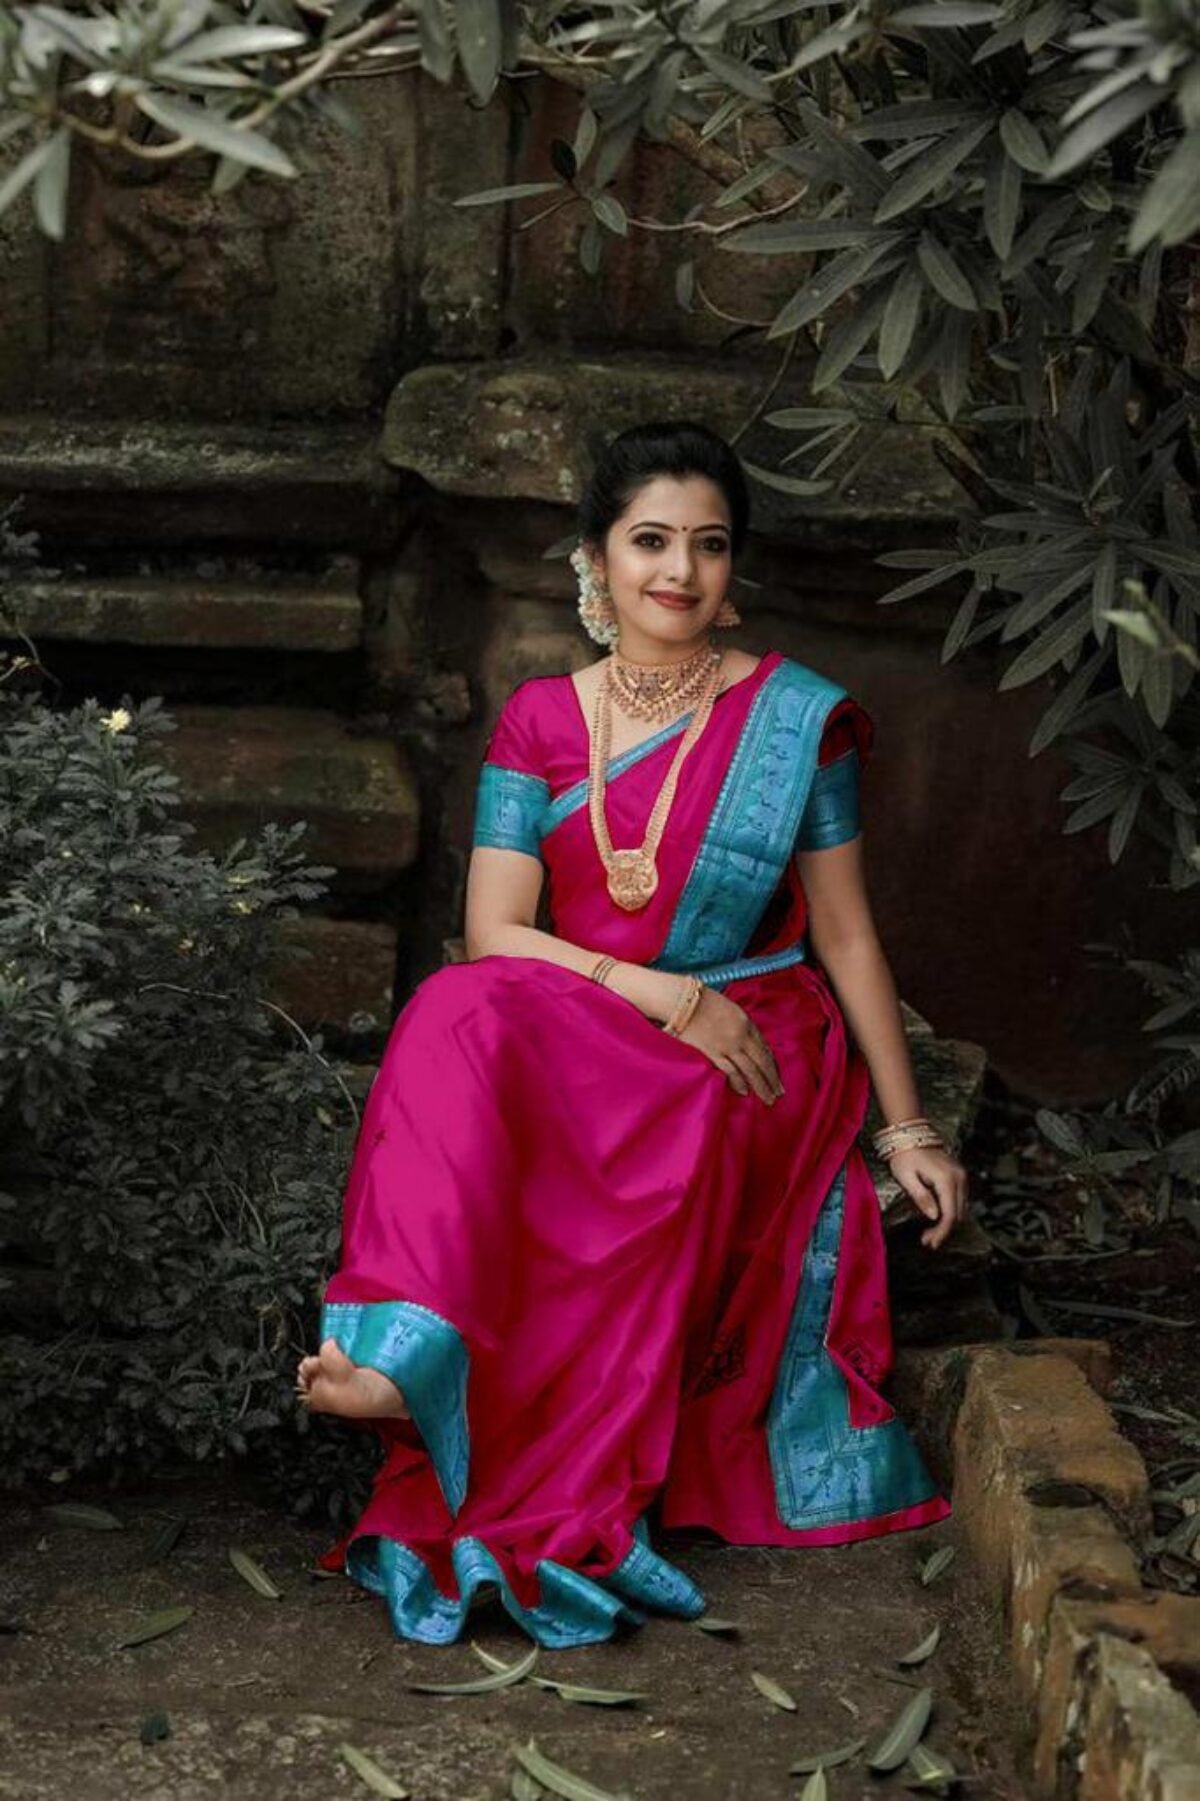 Marathi look | nauvari saree | pose | Marathi jewellery | Marathi wedding |  Bride poses, Bridal portrait poses, Indian bride poses